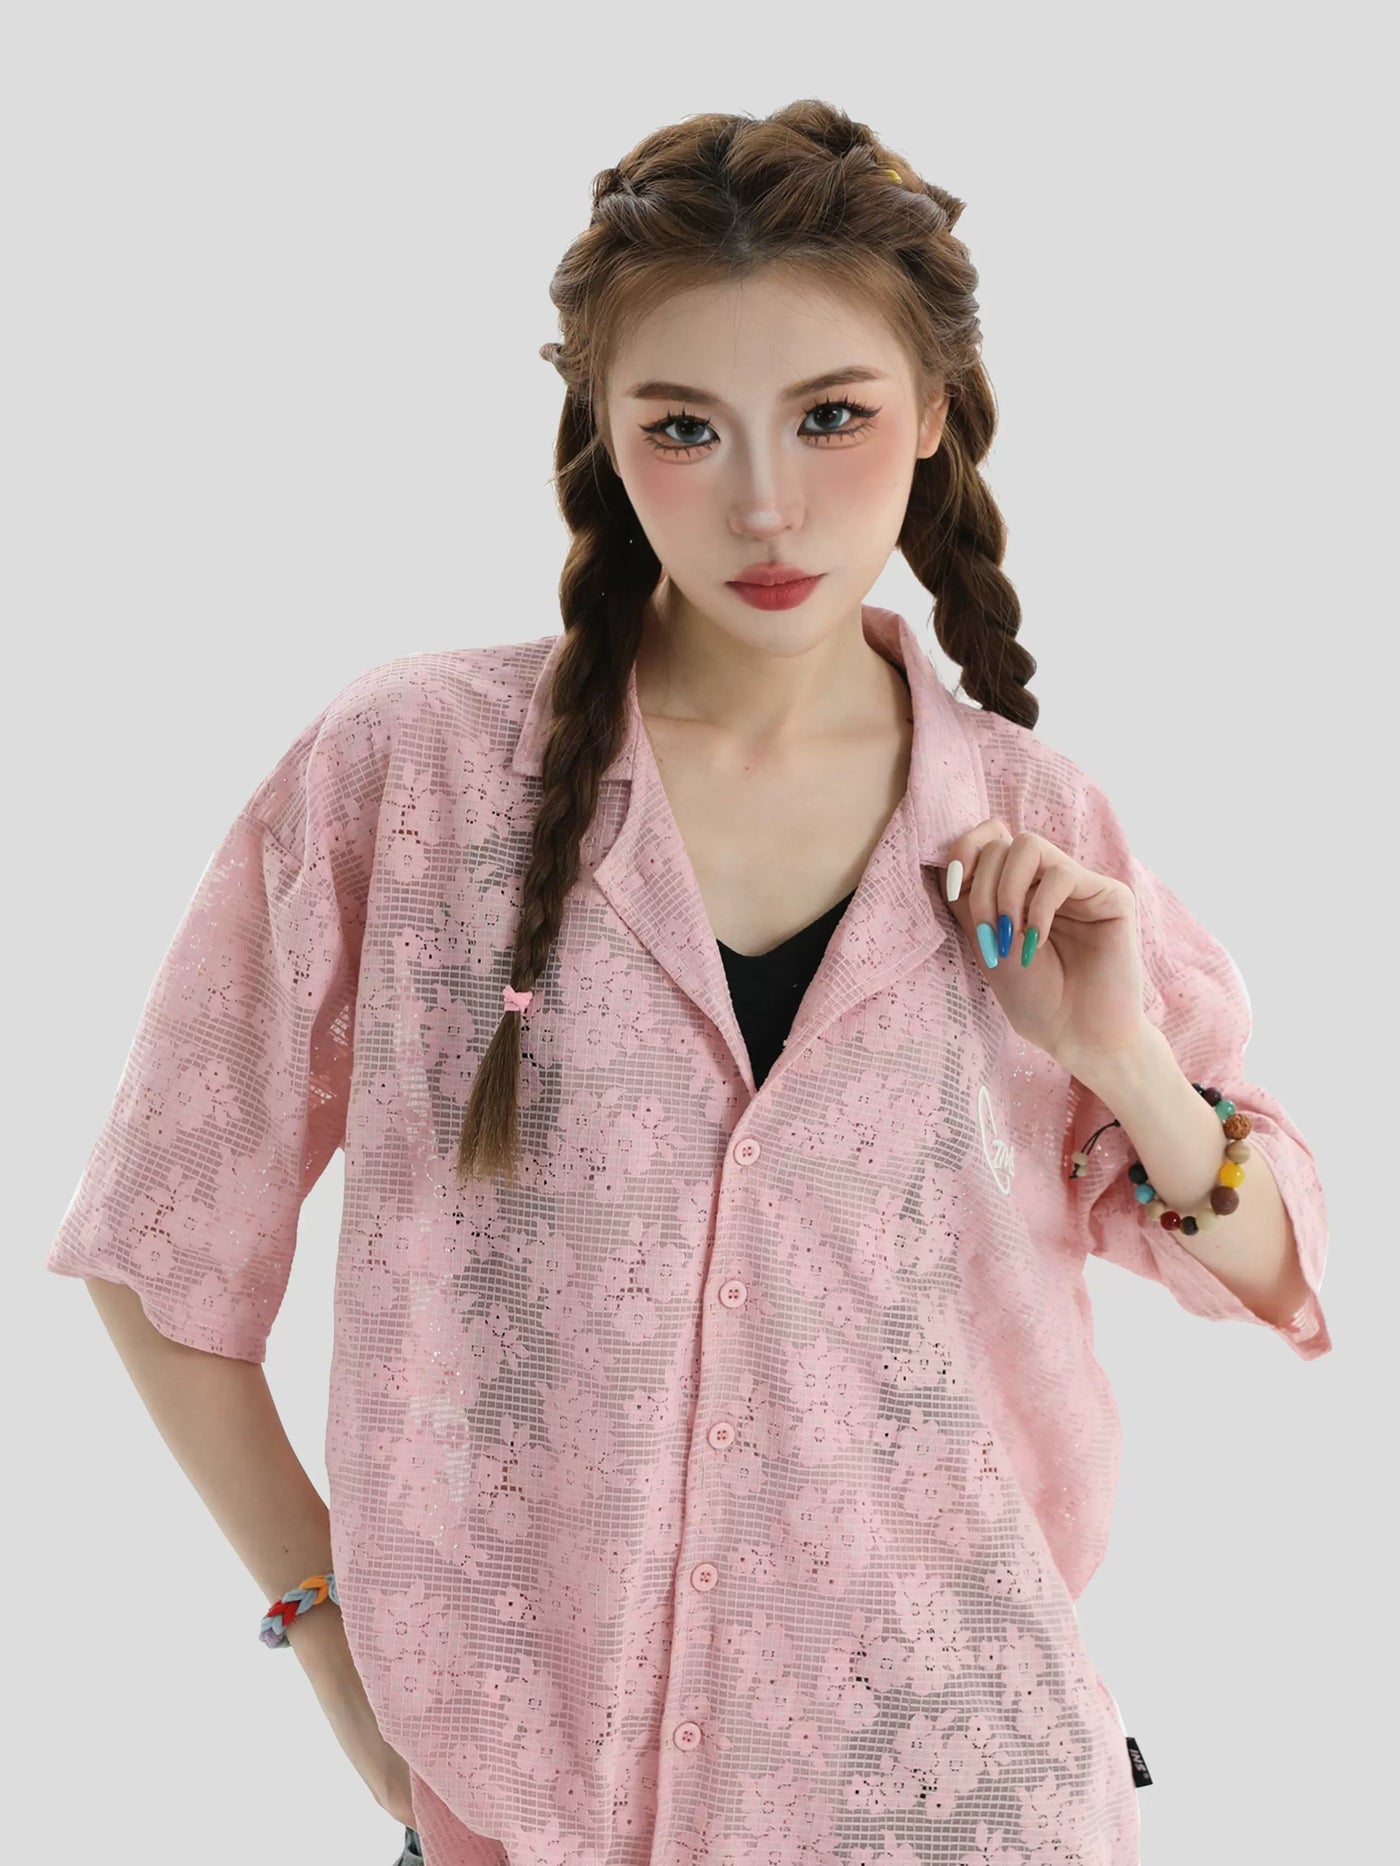 Vintage Pattern Hollowed Shirt Korean Street Fashion Shirt By INS Korea Shop Online at OH Vault